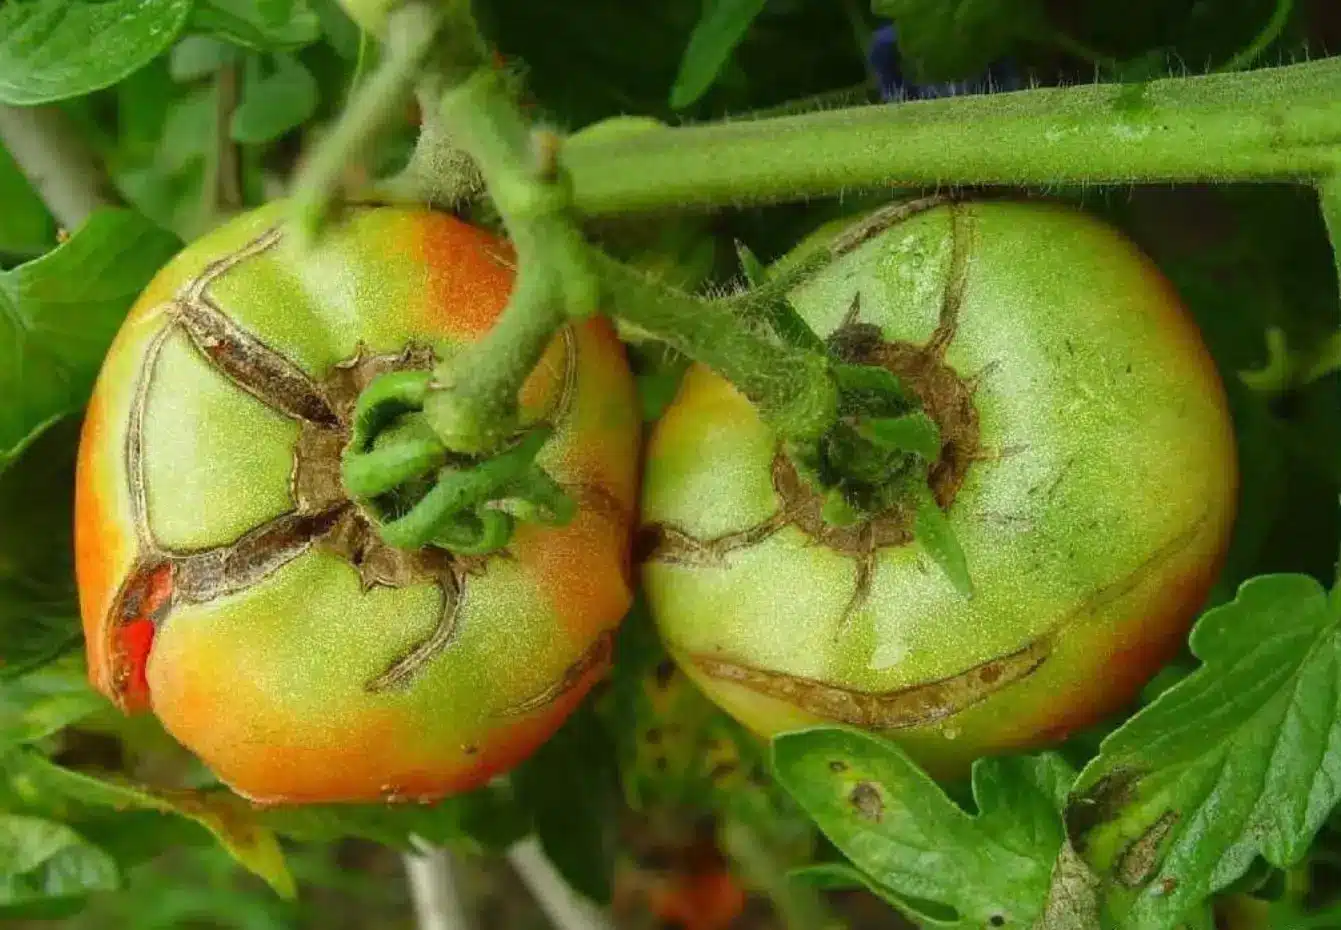 Sunburned tomatoes